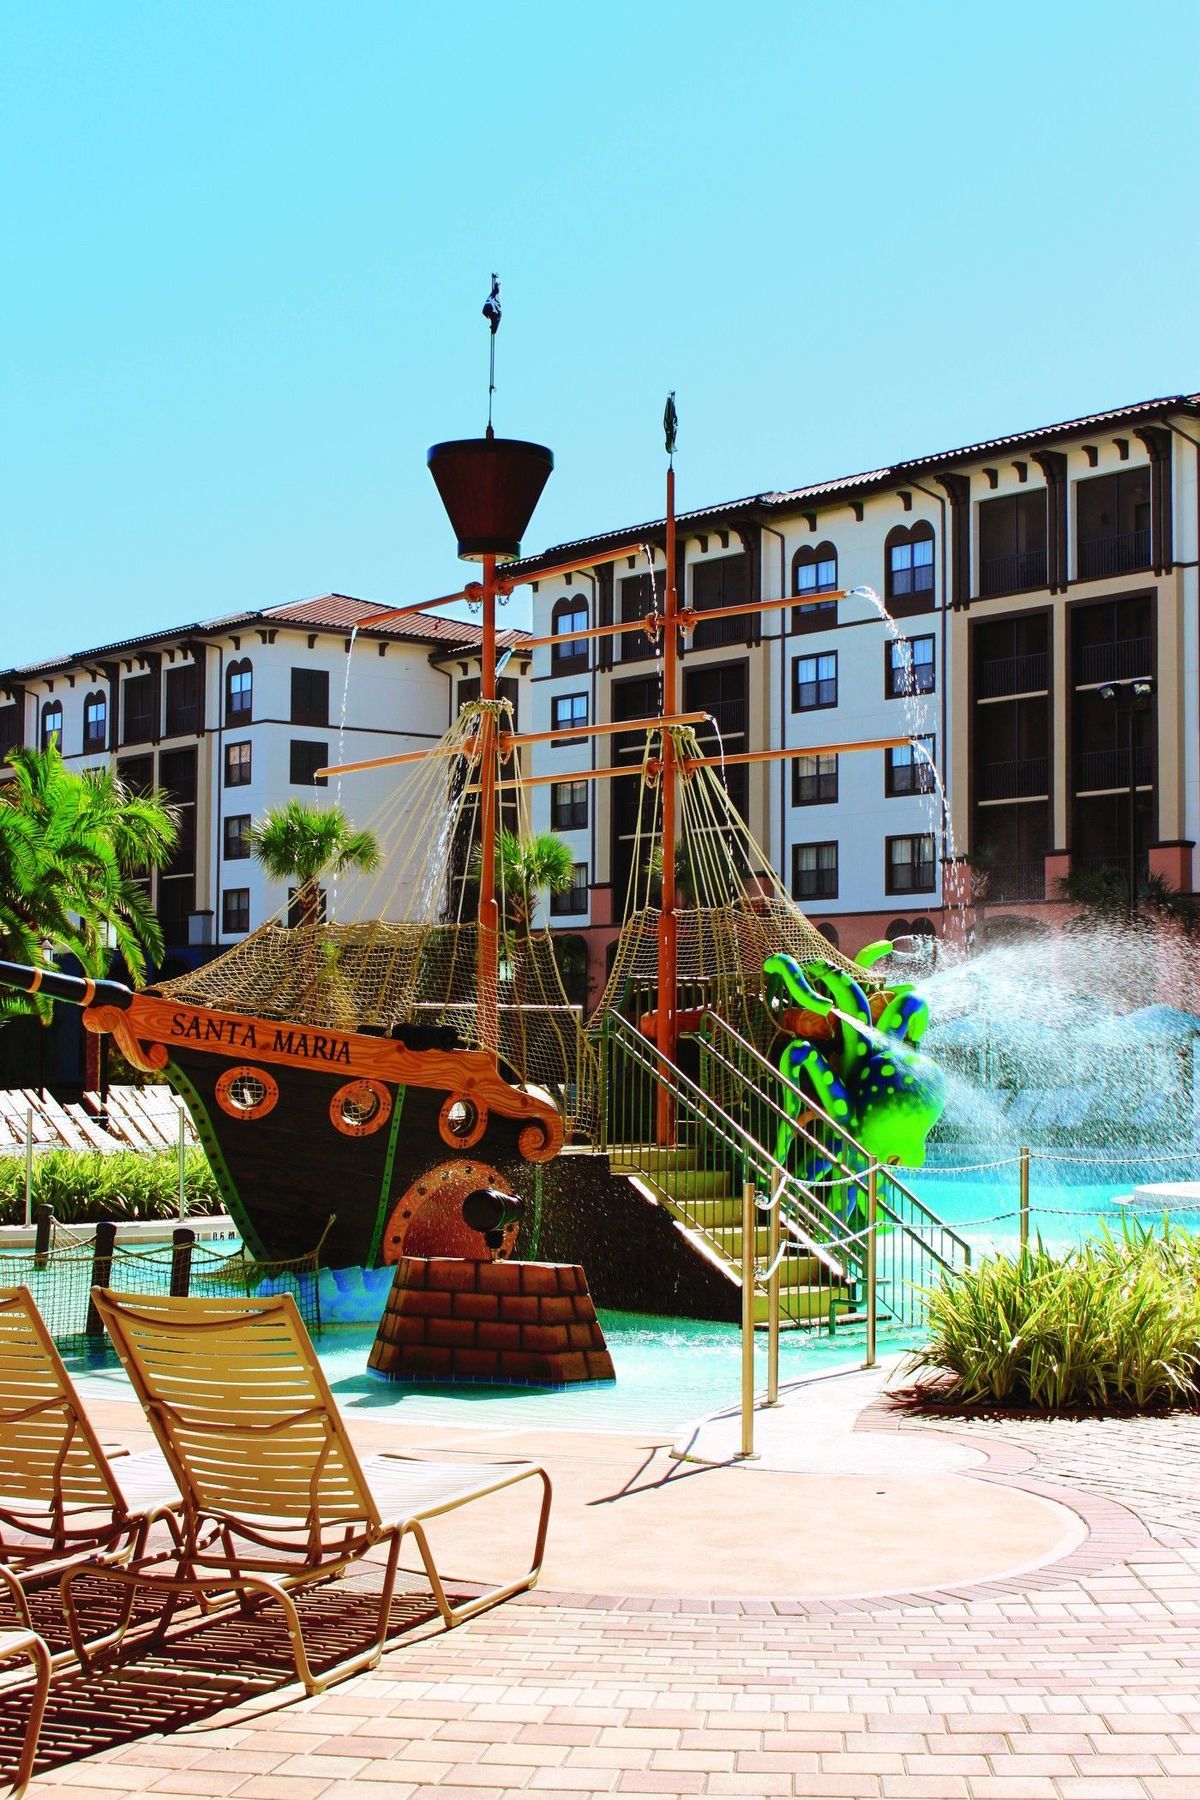 Sheraton Vistana Villages Resort Villas, I-Drive Orlando Facilities photo